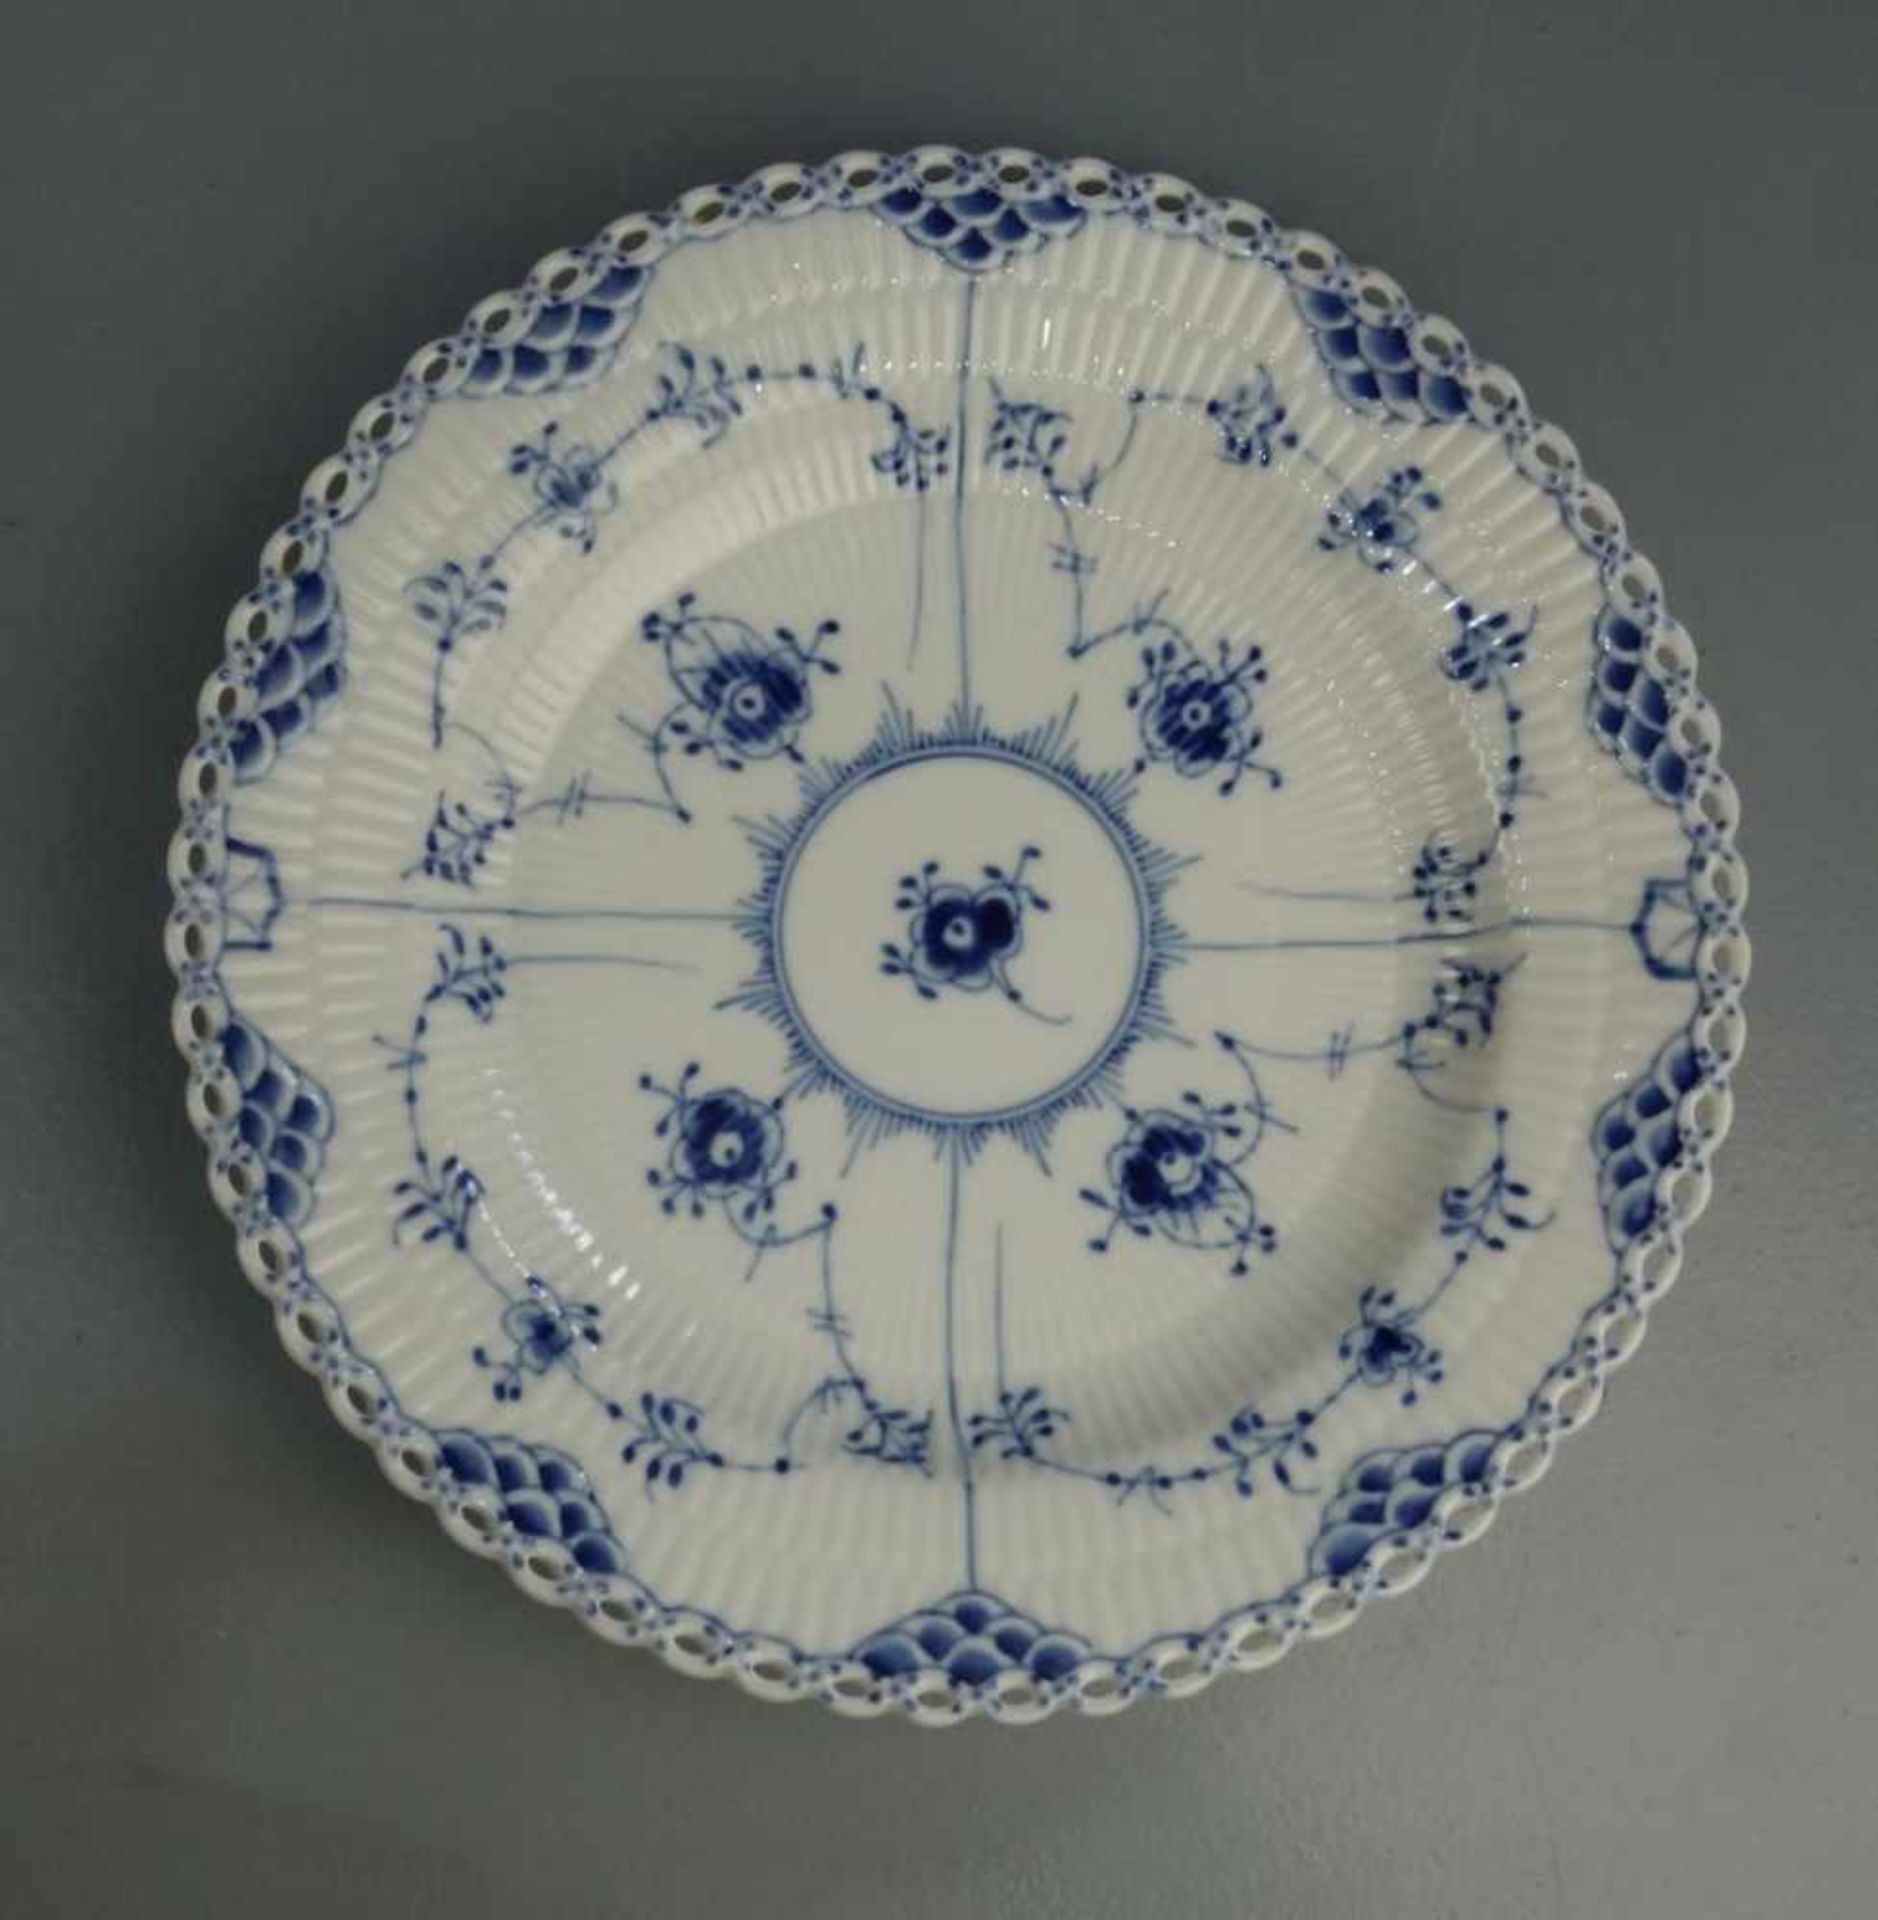 6 SPEISETELLER / six plates, "MUSSELMALET VOLLSPITZE", Porzellan, Manufaktur Royal Copenhagen, - Bild 2 aus 3